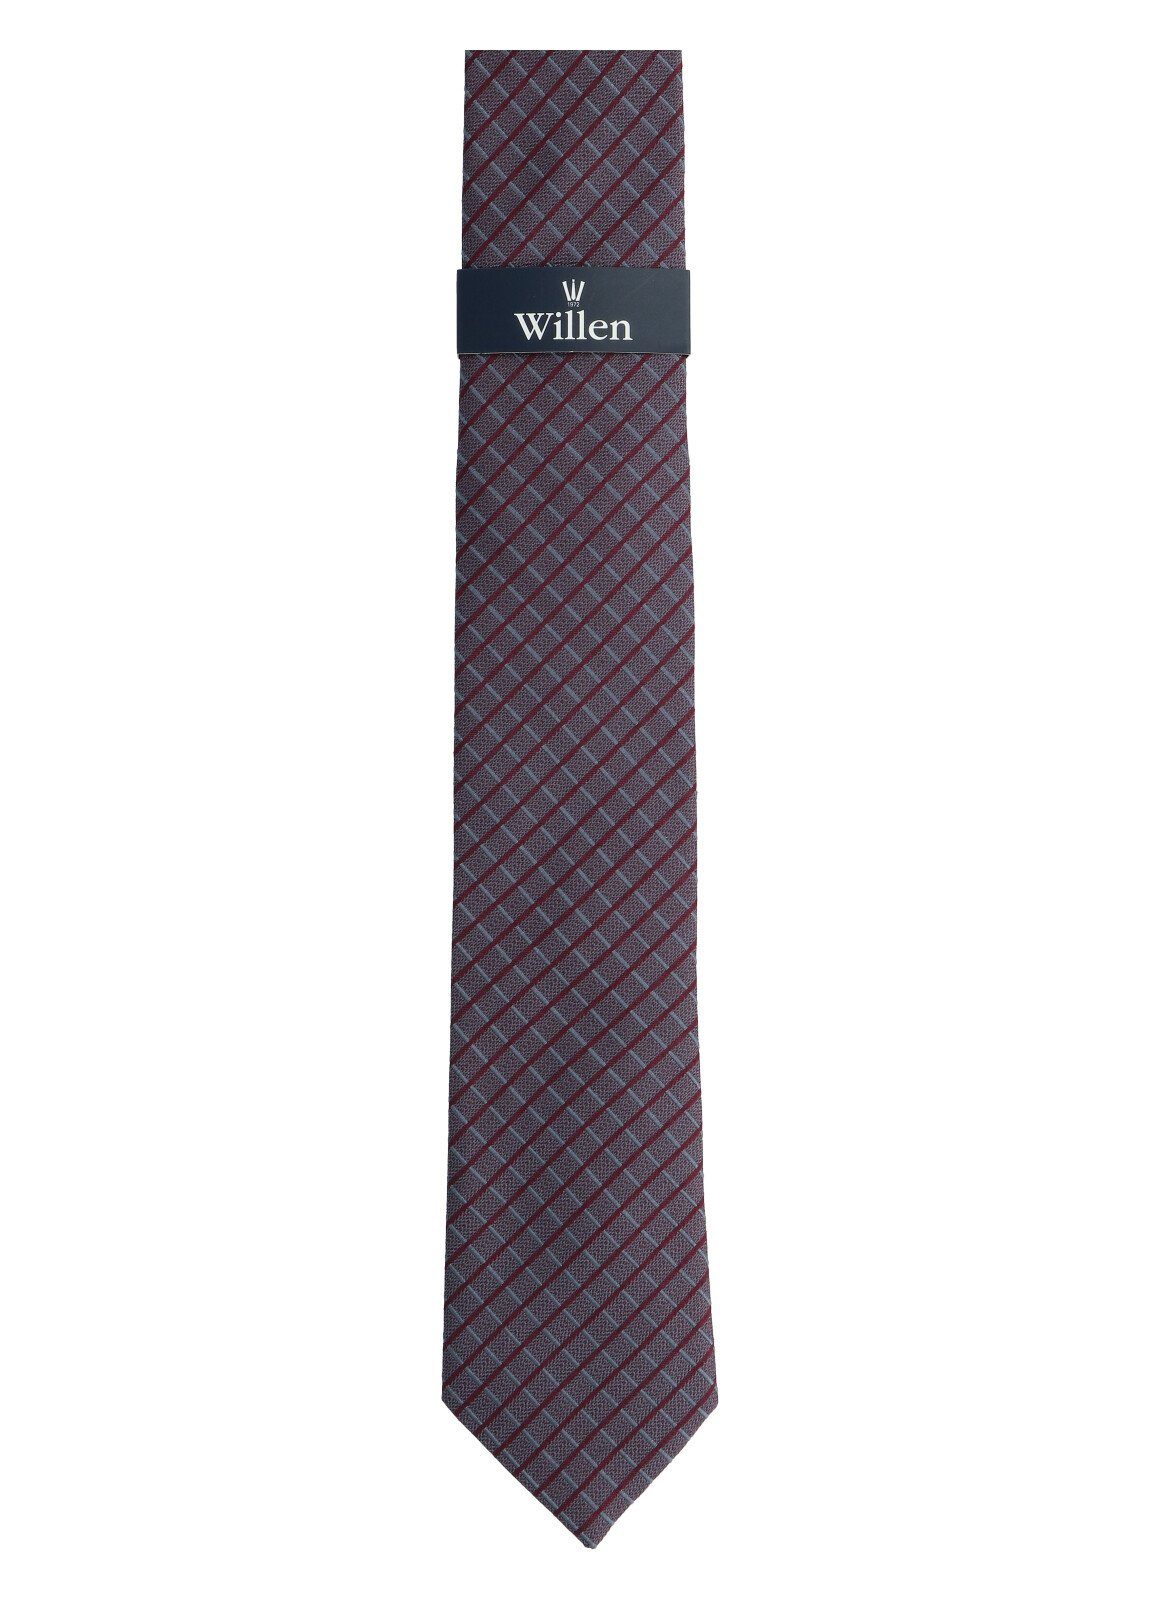 dunkelbordeaux & WILLEN Krawatte/Fliege Weste, Hemd